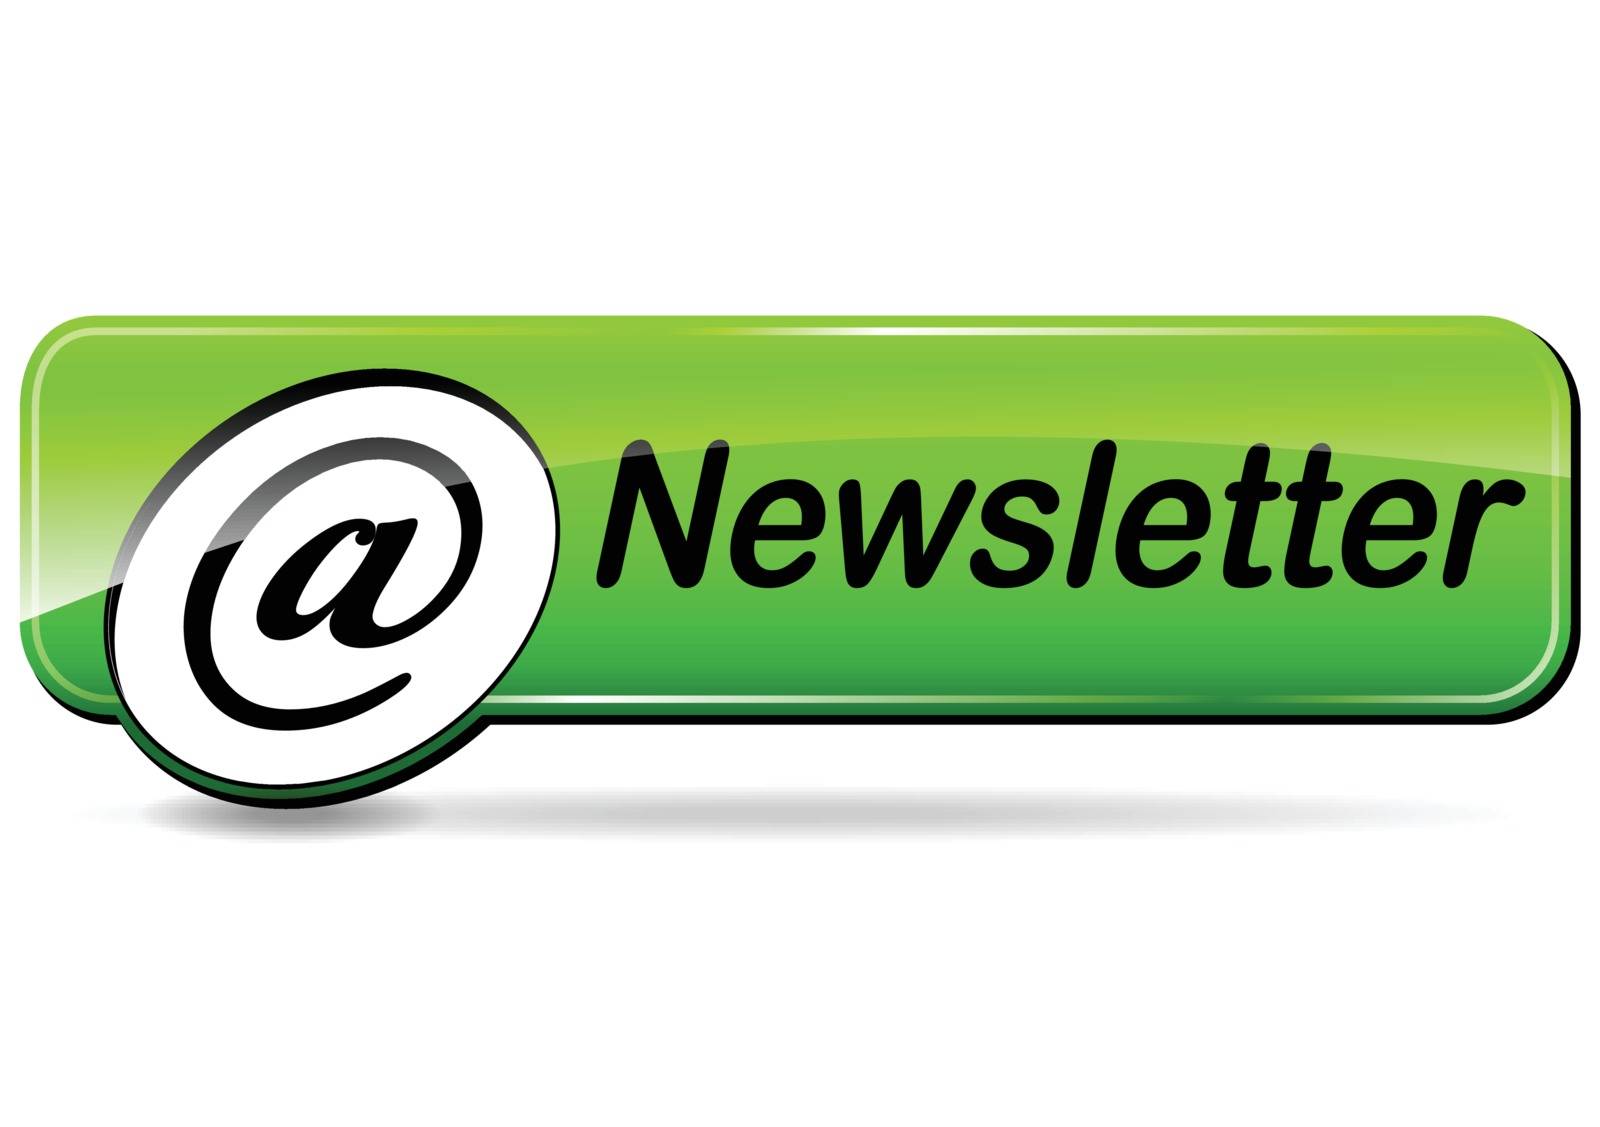 newsletter green button by nickylarson974